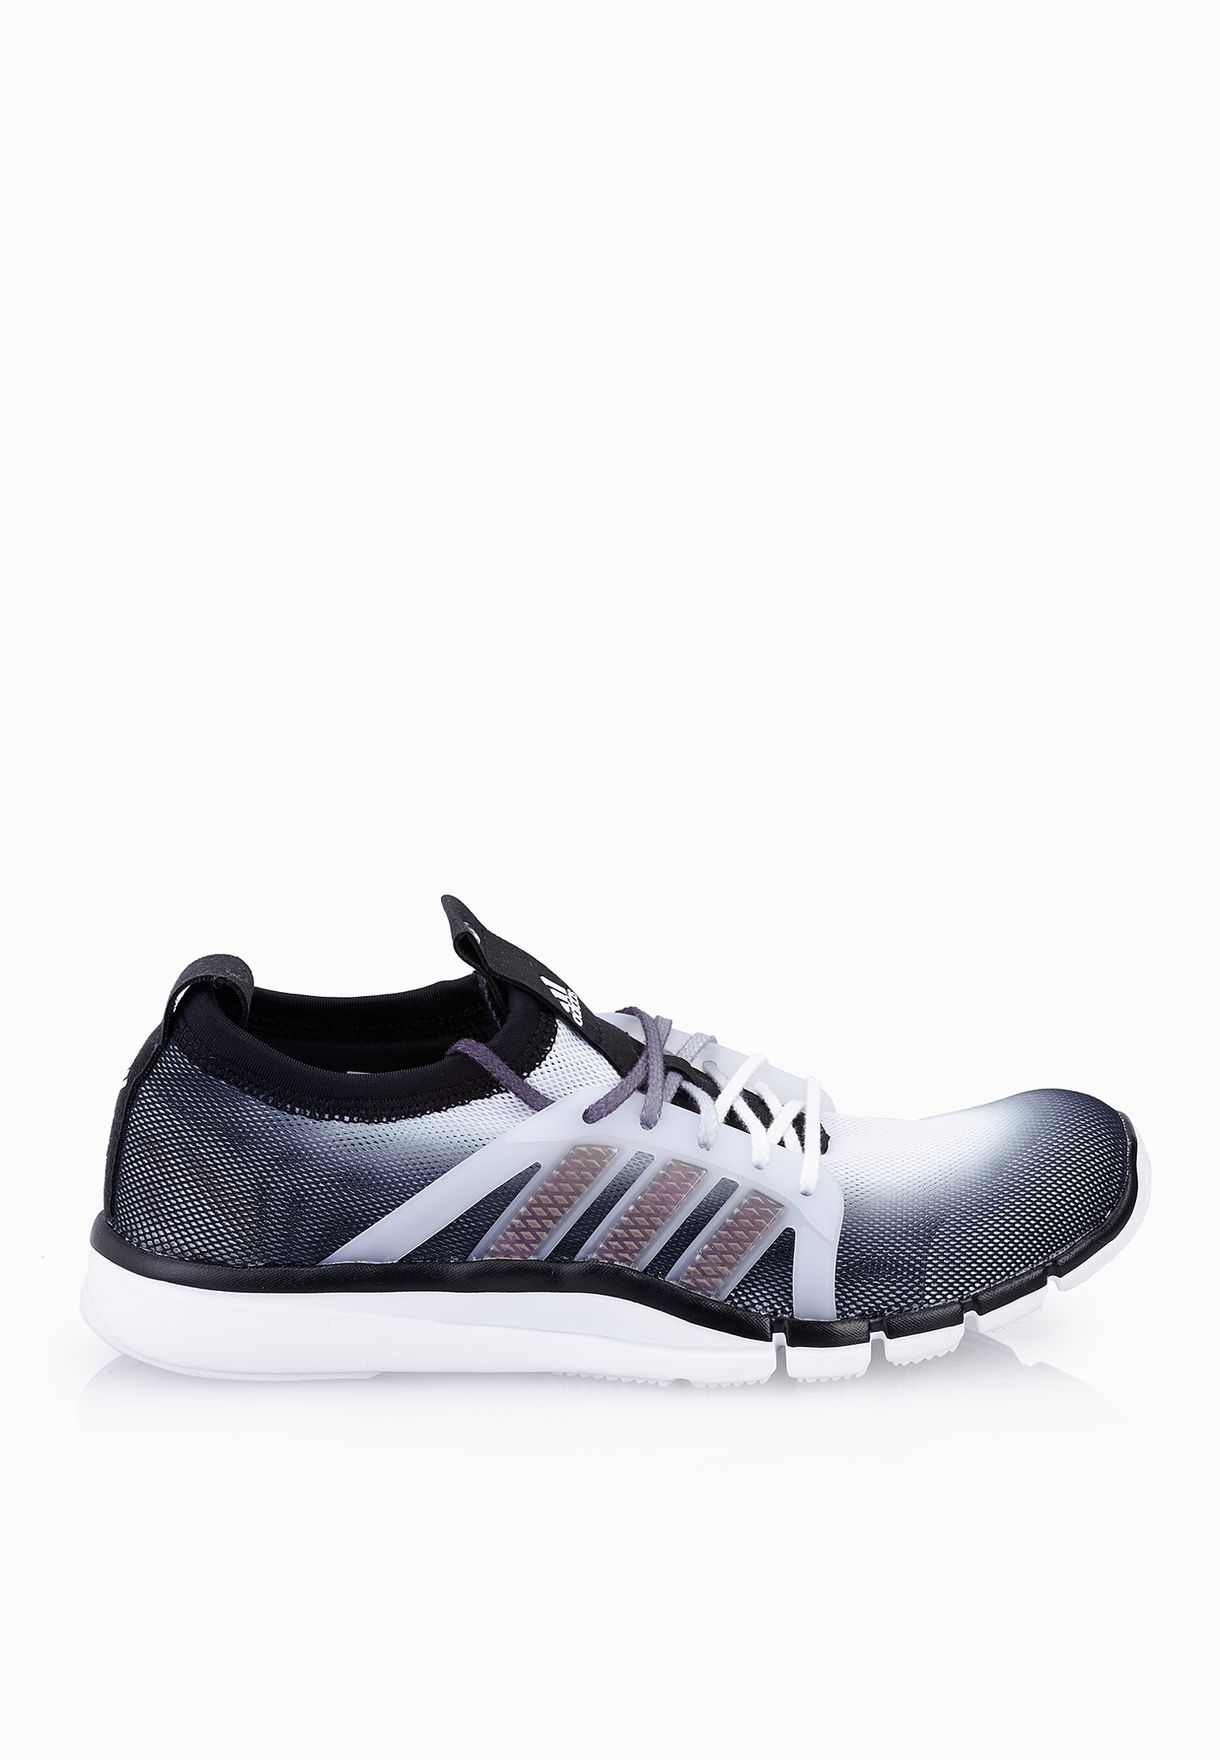 adidas core grace training shoe